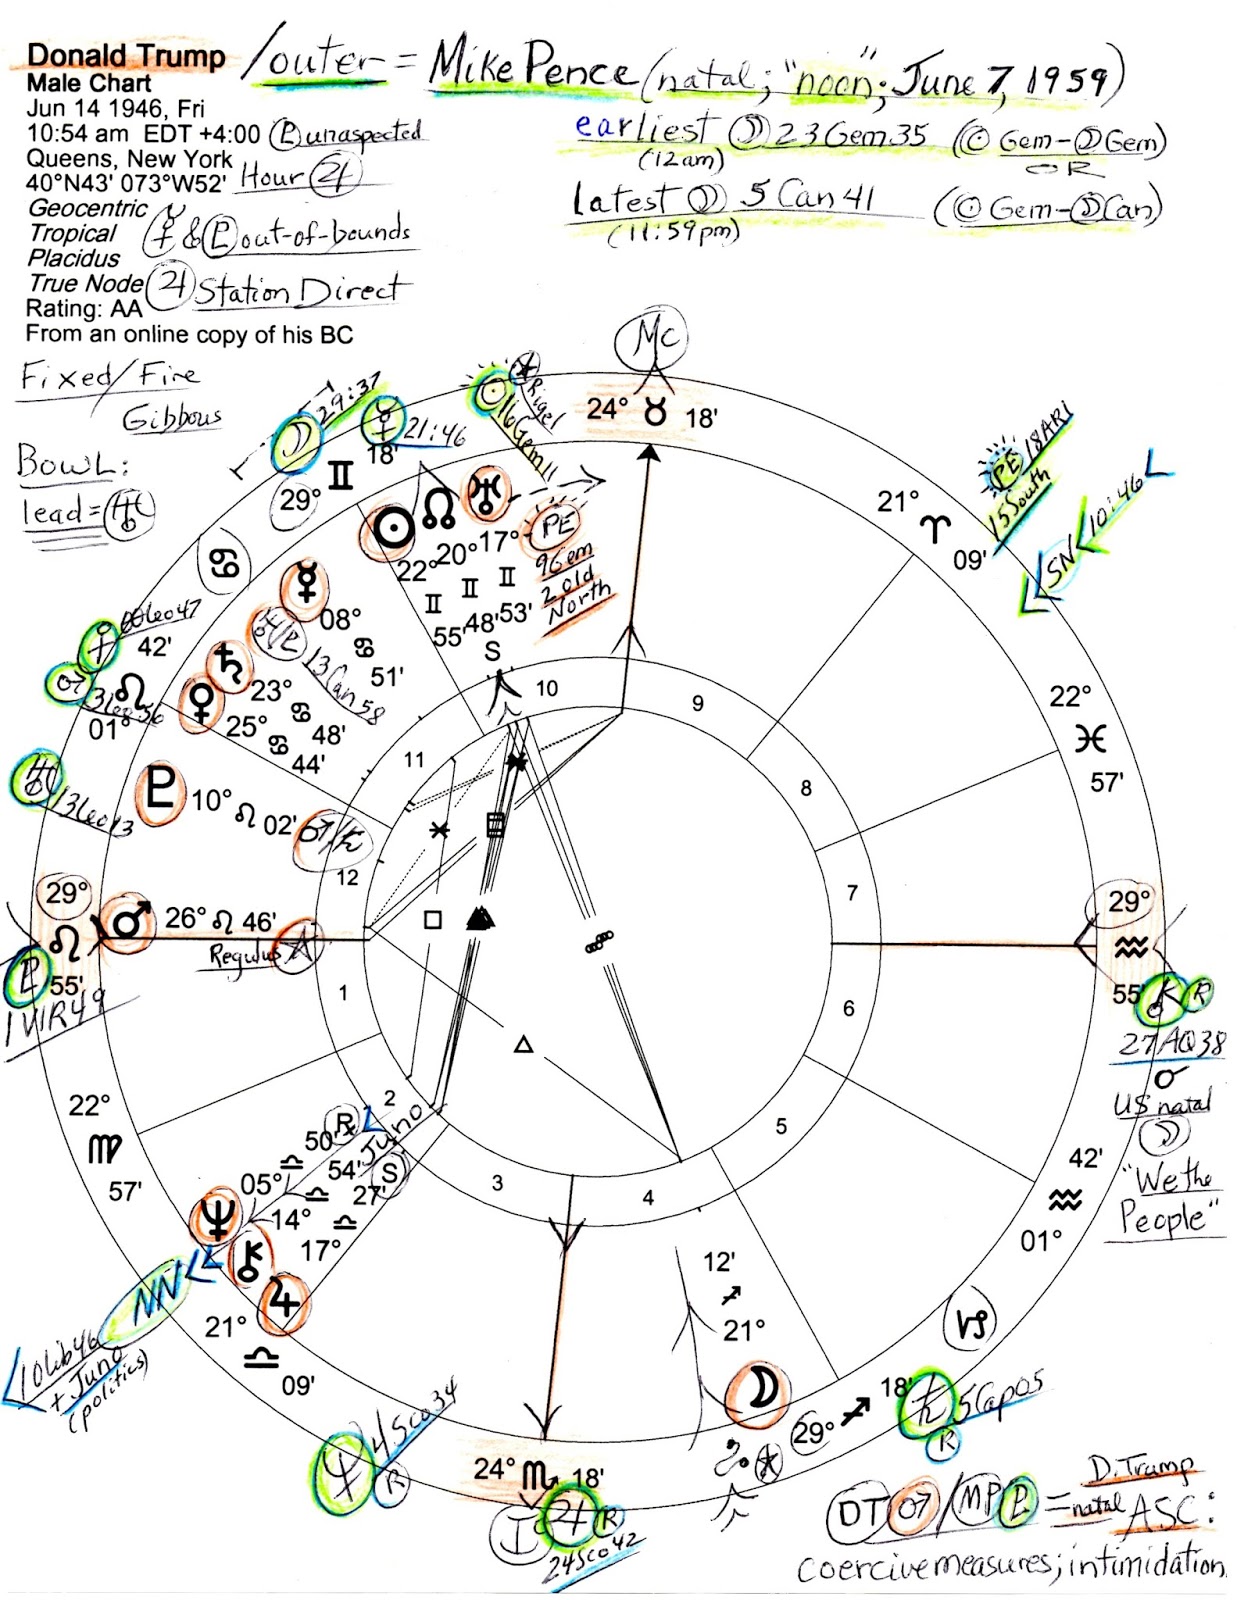 Stars Over Washington: Horoscope: Donald Trump w Mike Pence's natal planets